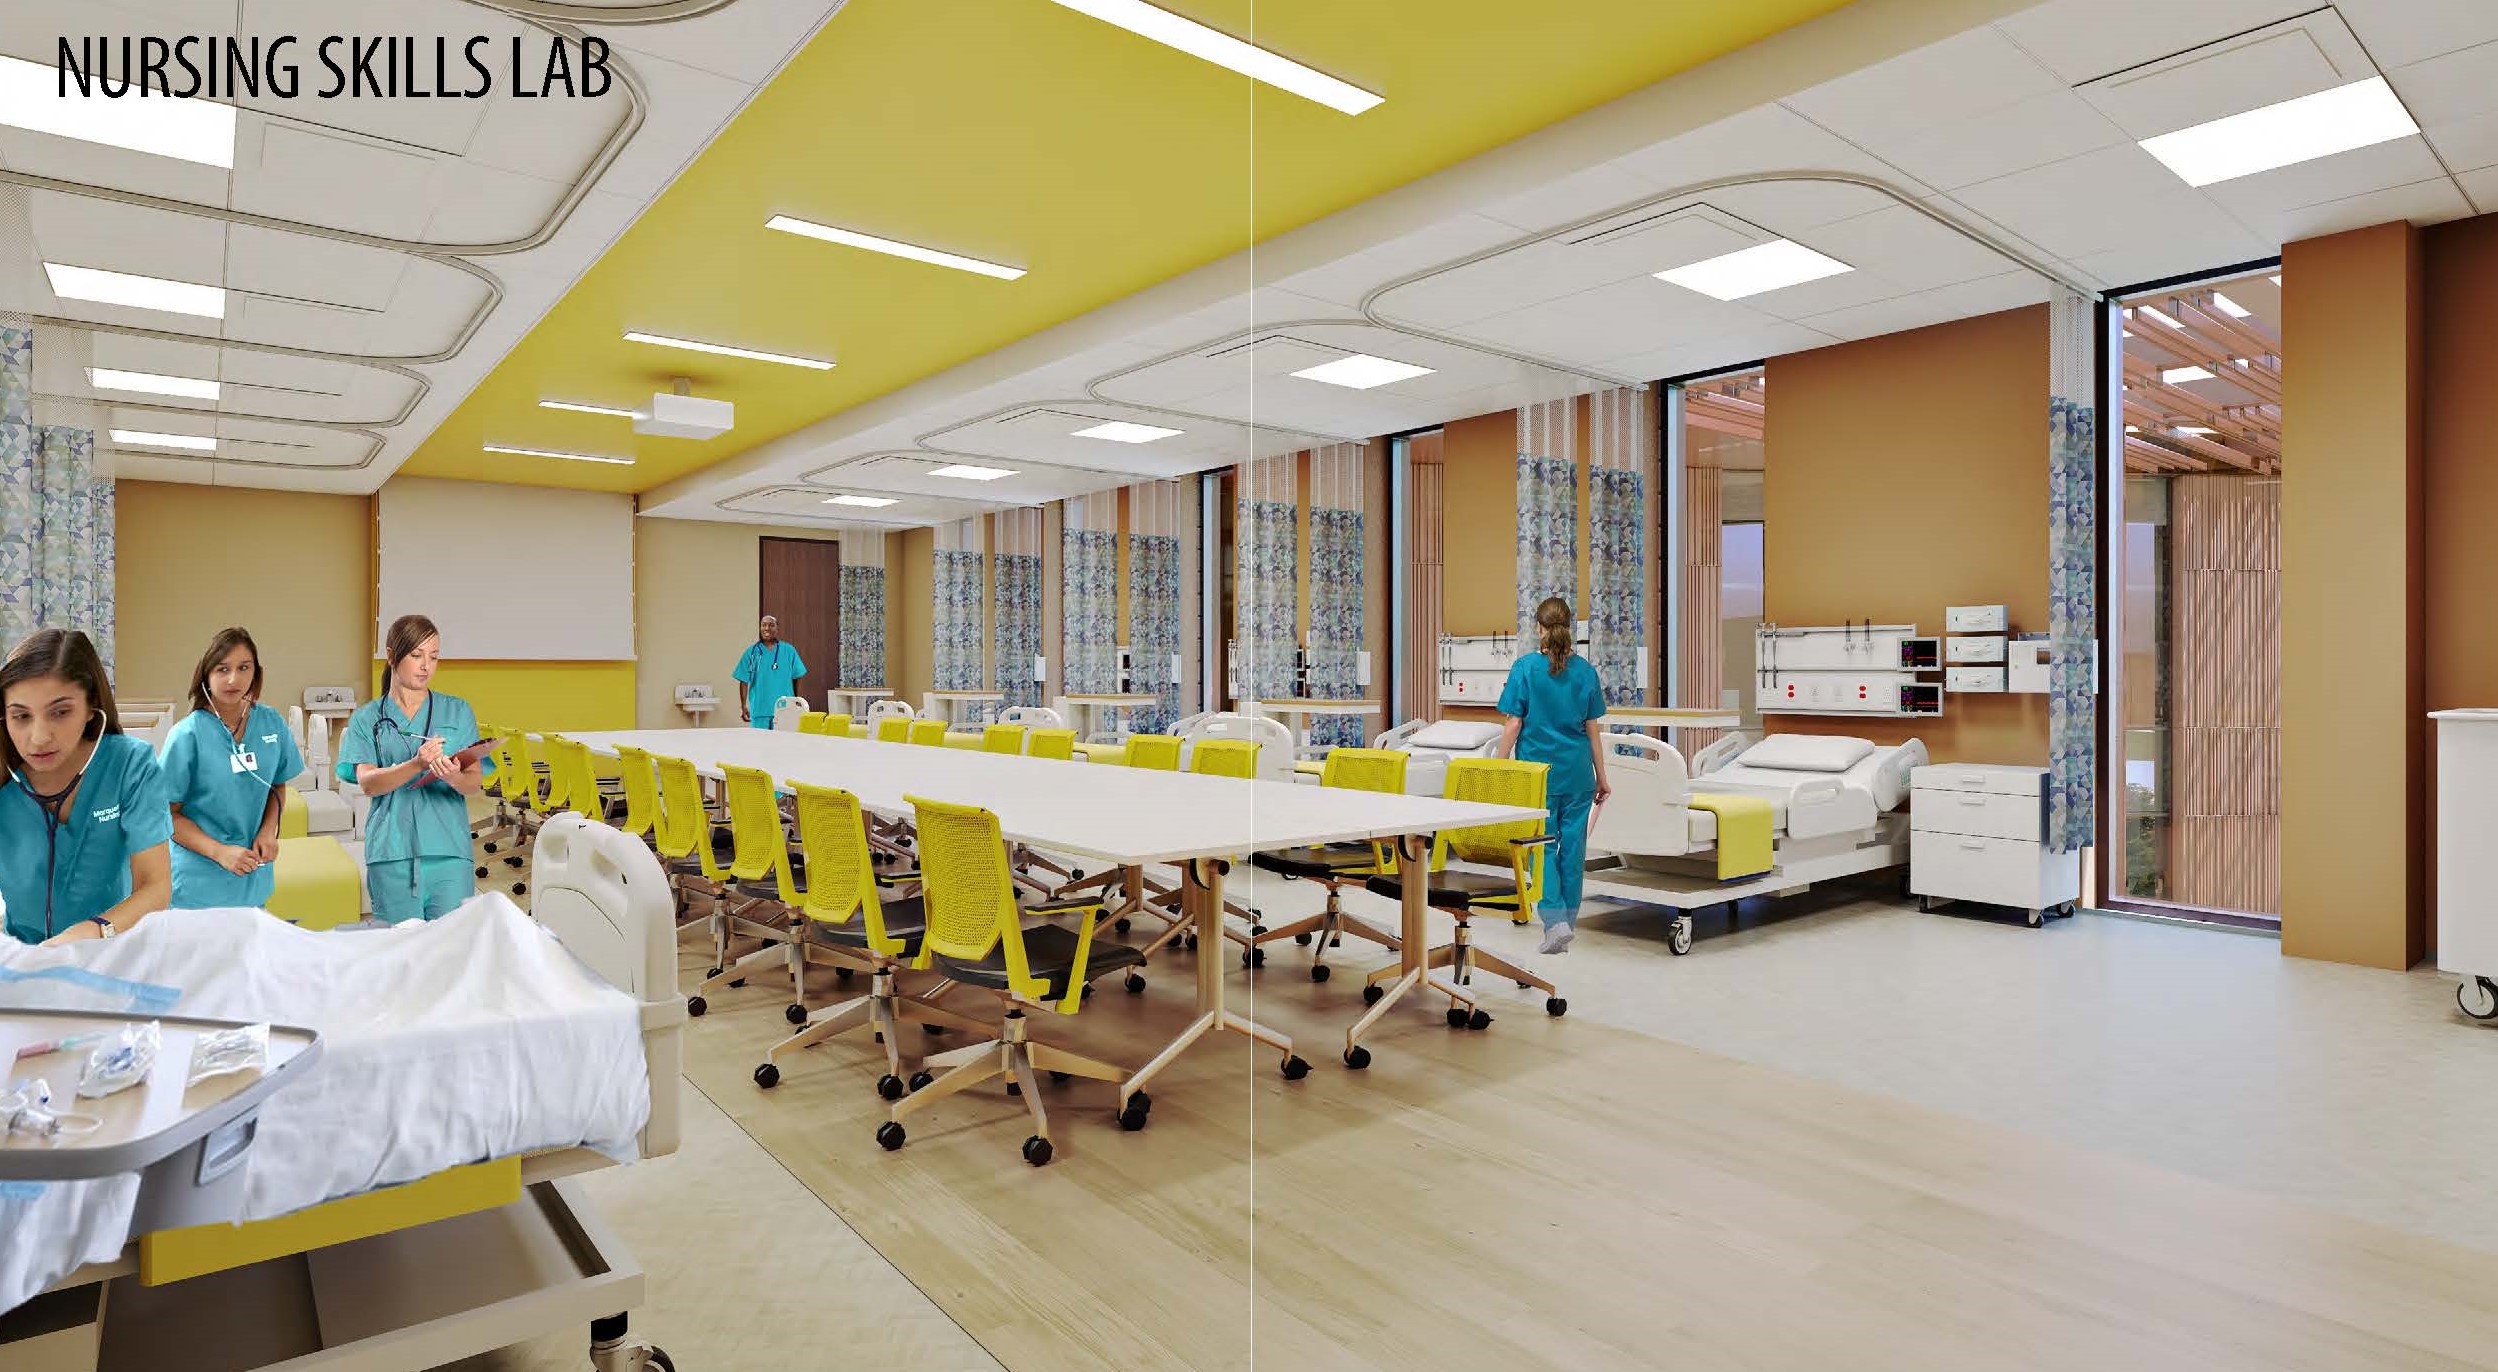 uh-katy-renderings-interior-nursing-skills-lab.jpg